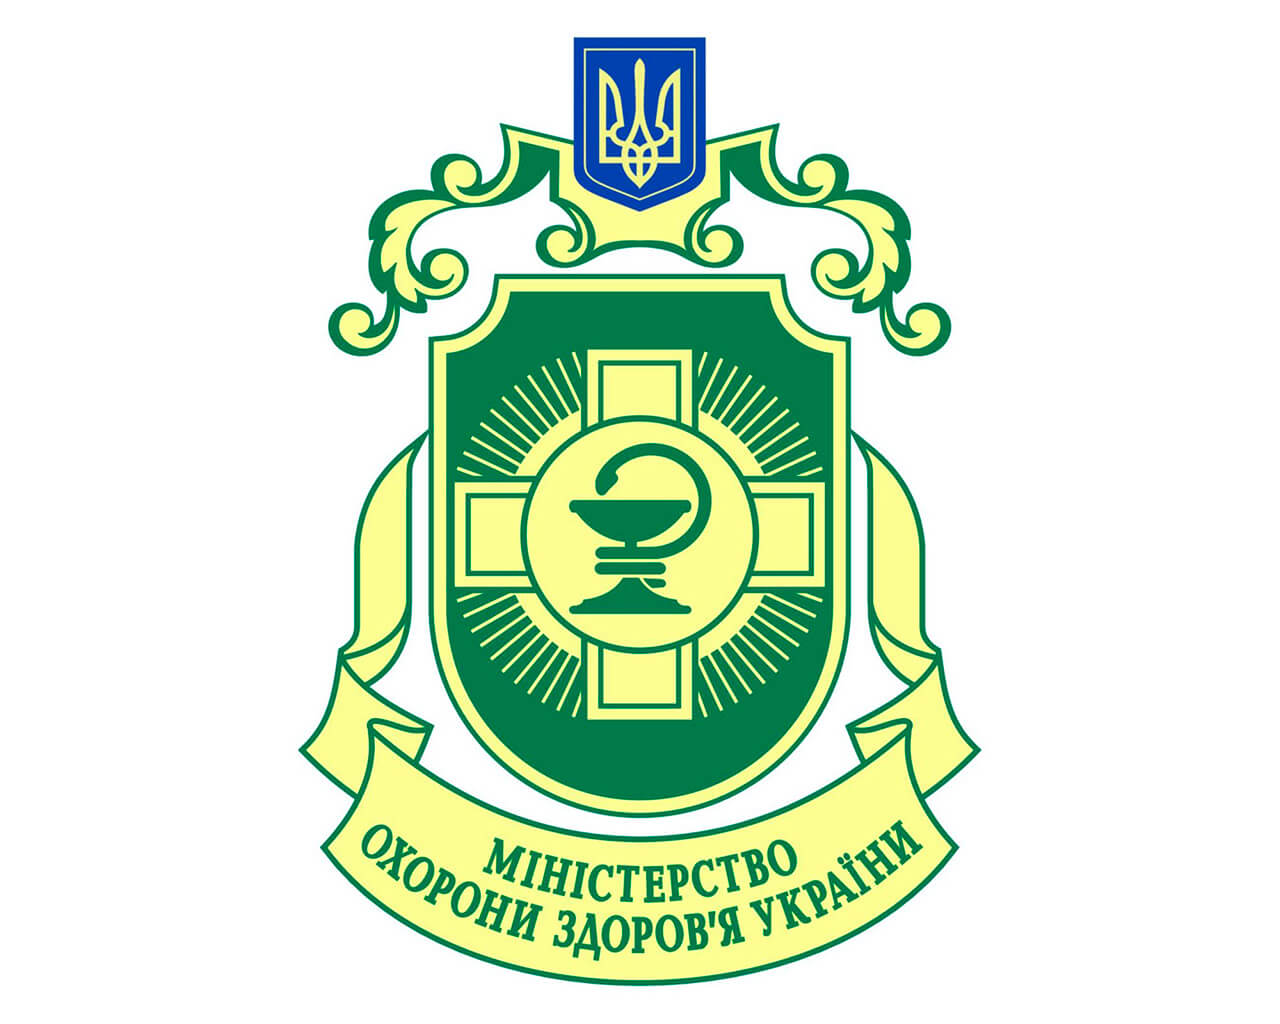 moz-logo